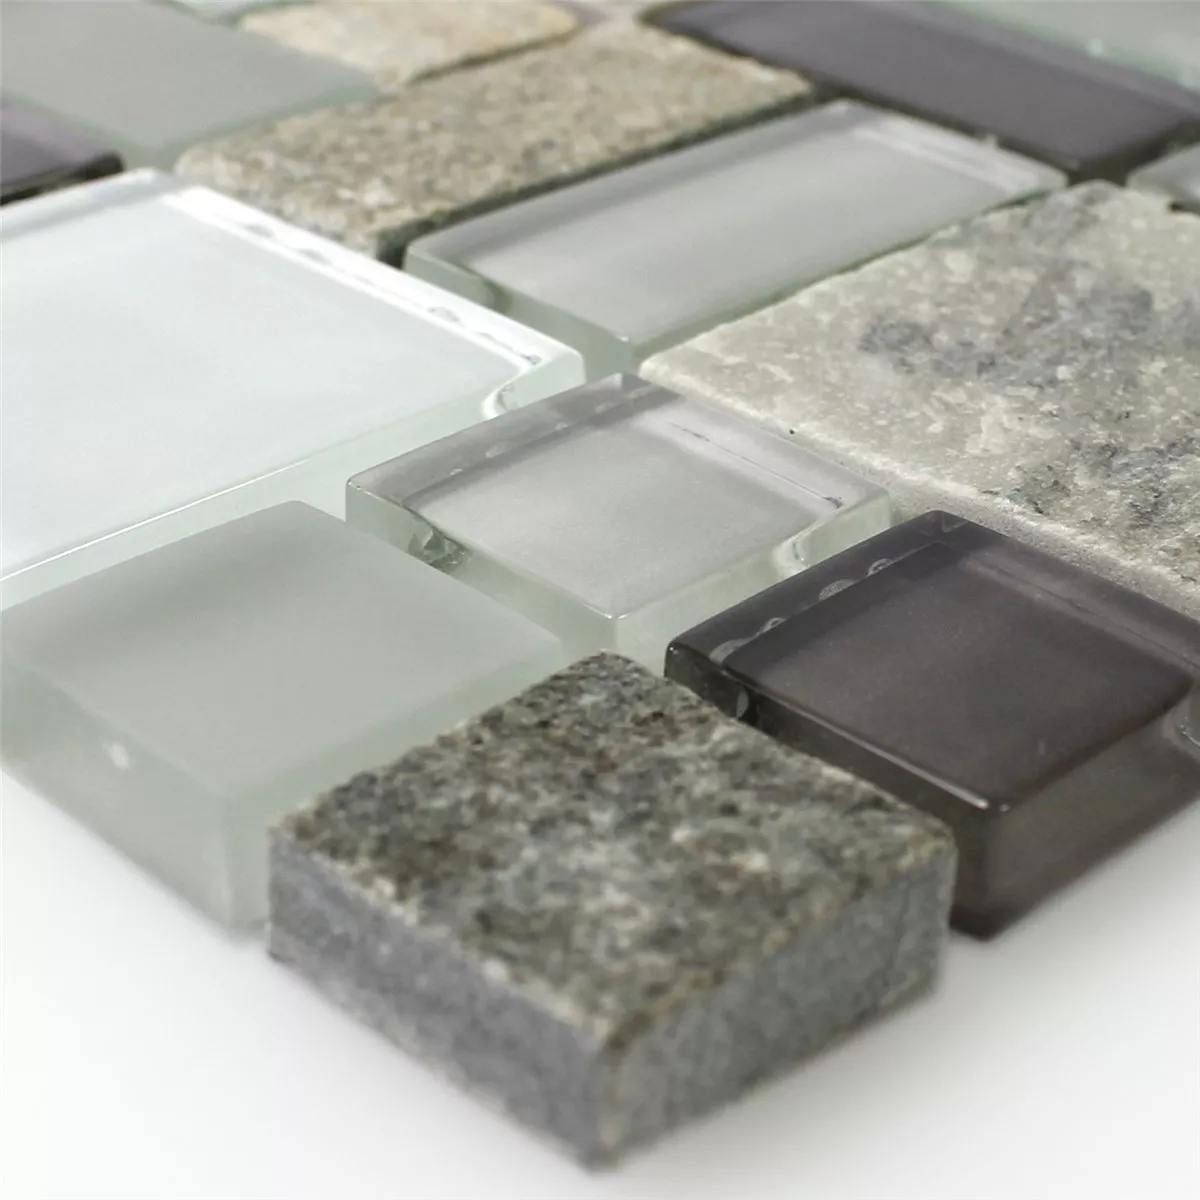 Mosaic Tiles Glass Natural Stone Grey Brown